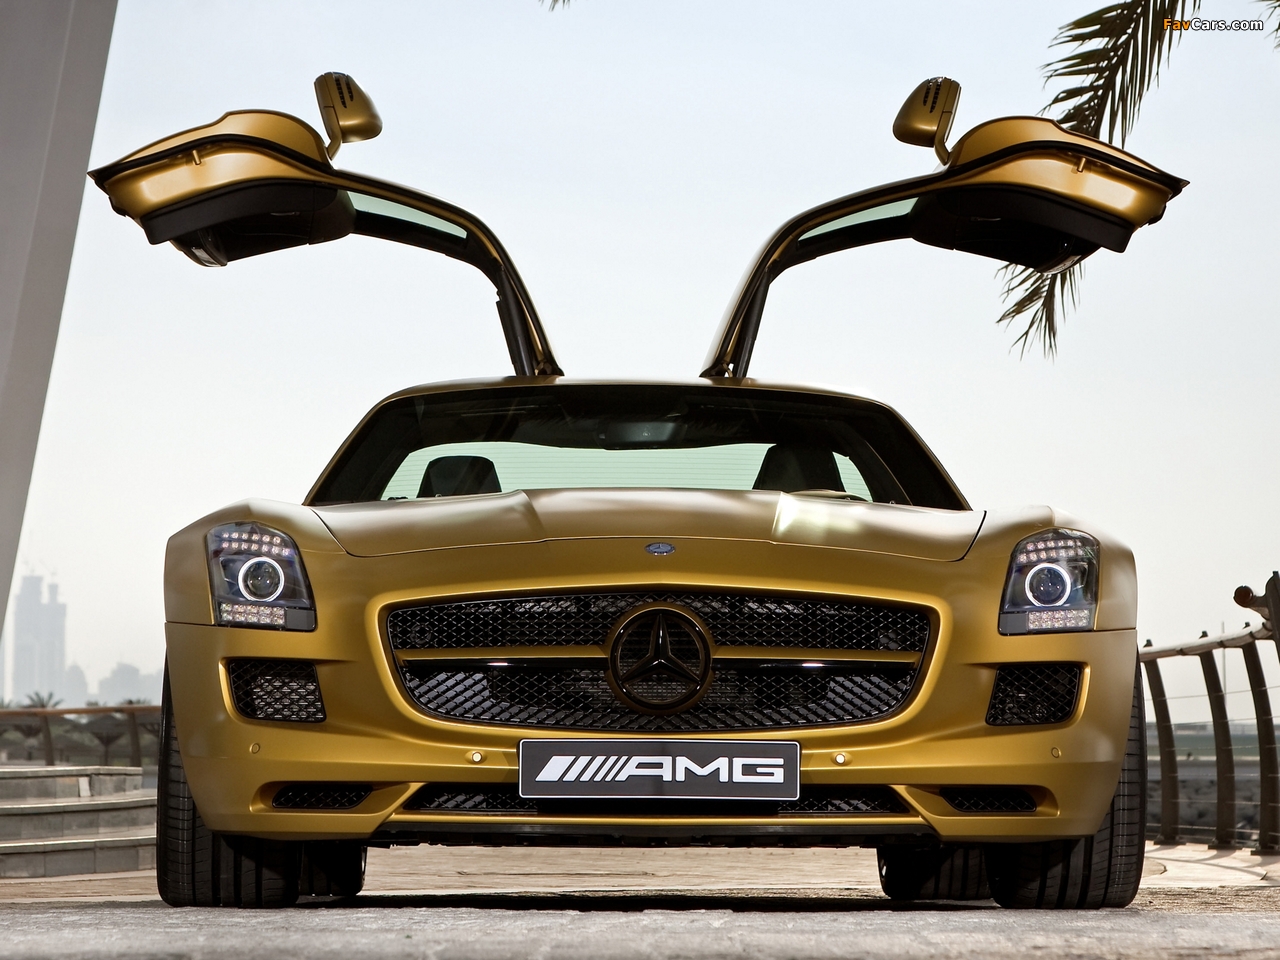 Mercedes-Benz SLS 63 AMG Desert Gold (C197) 2010 pictures (1280 x 960)